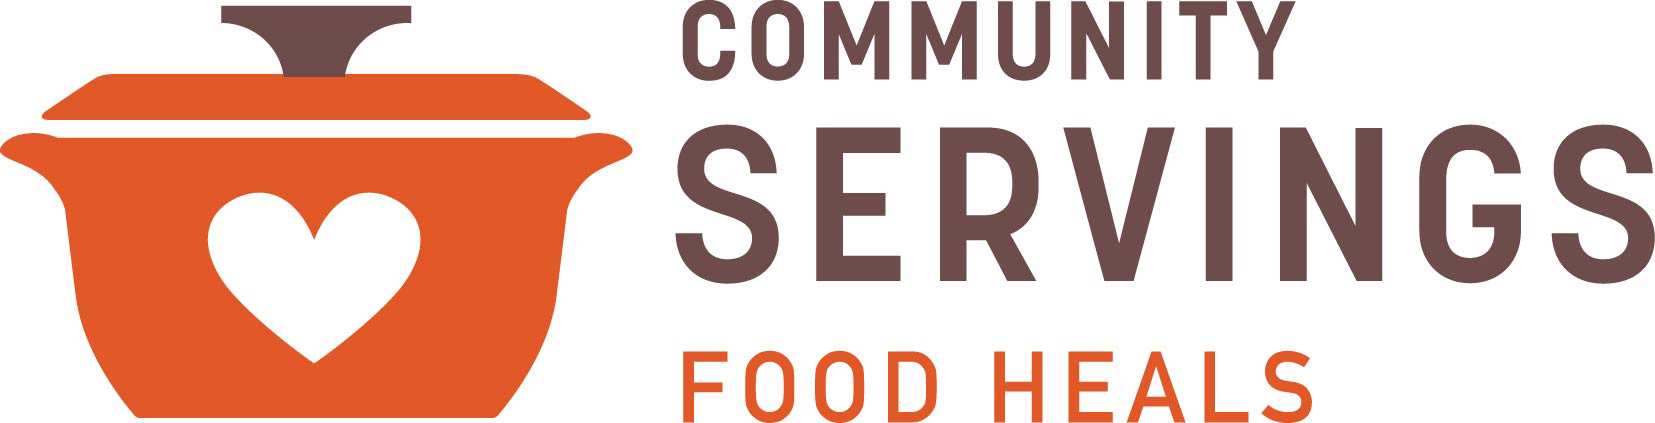 community servings logo